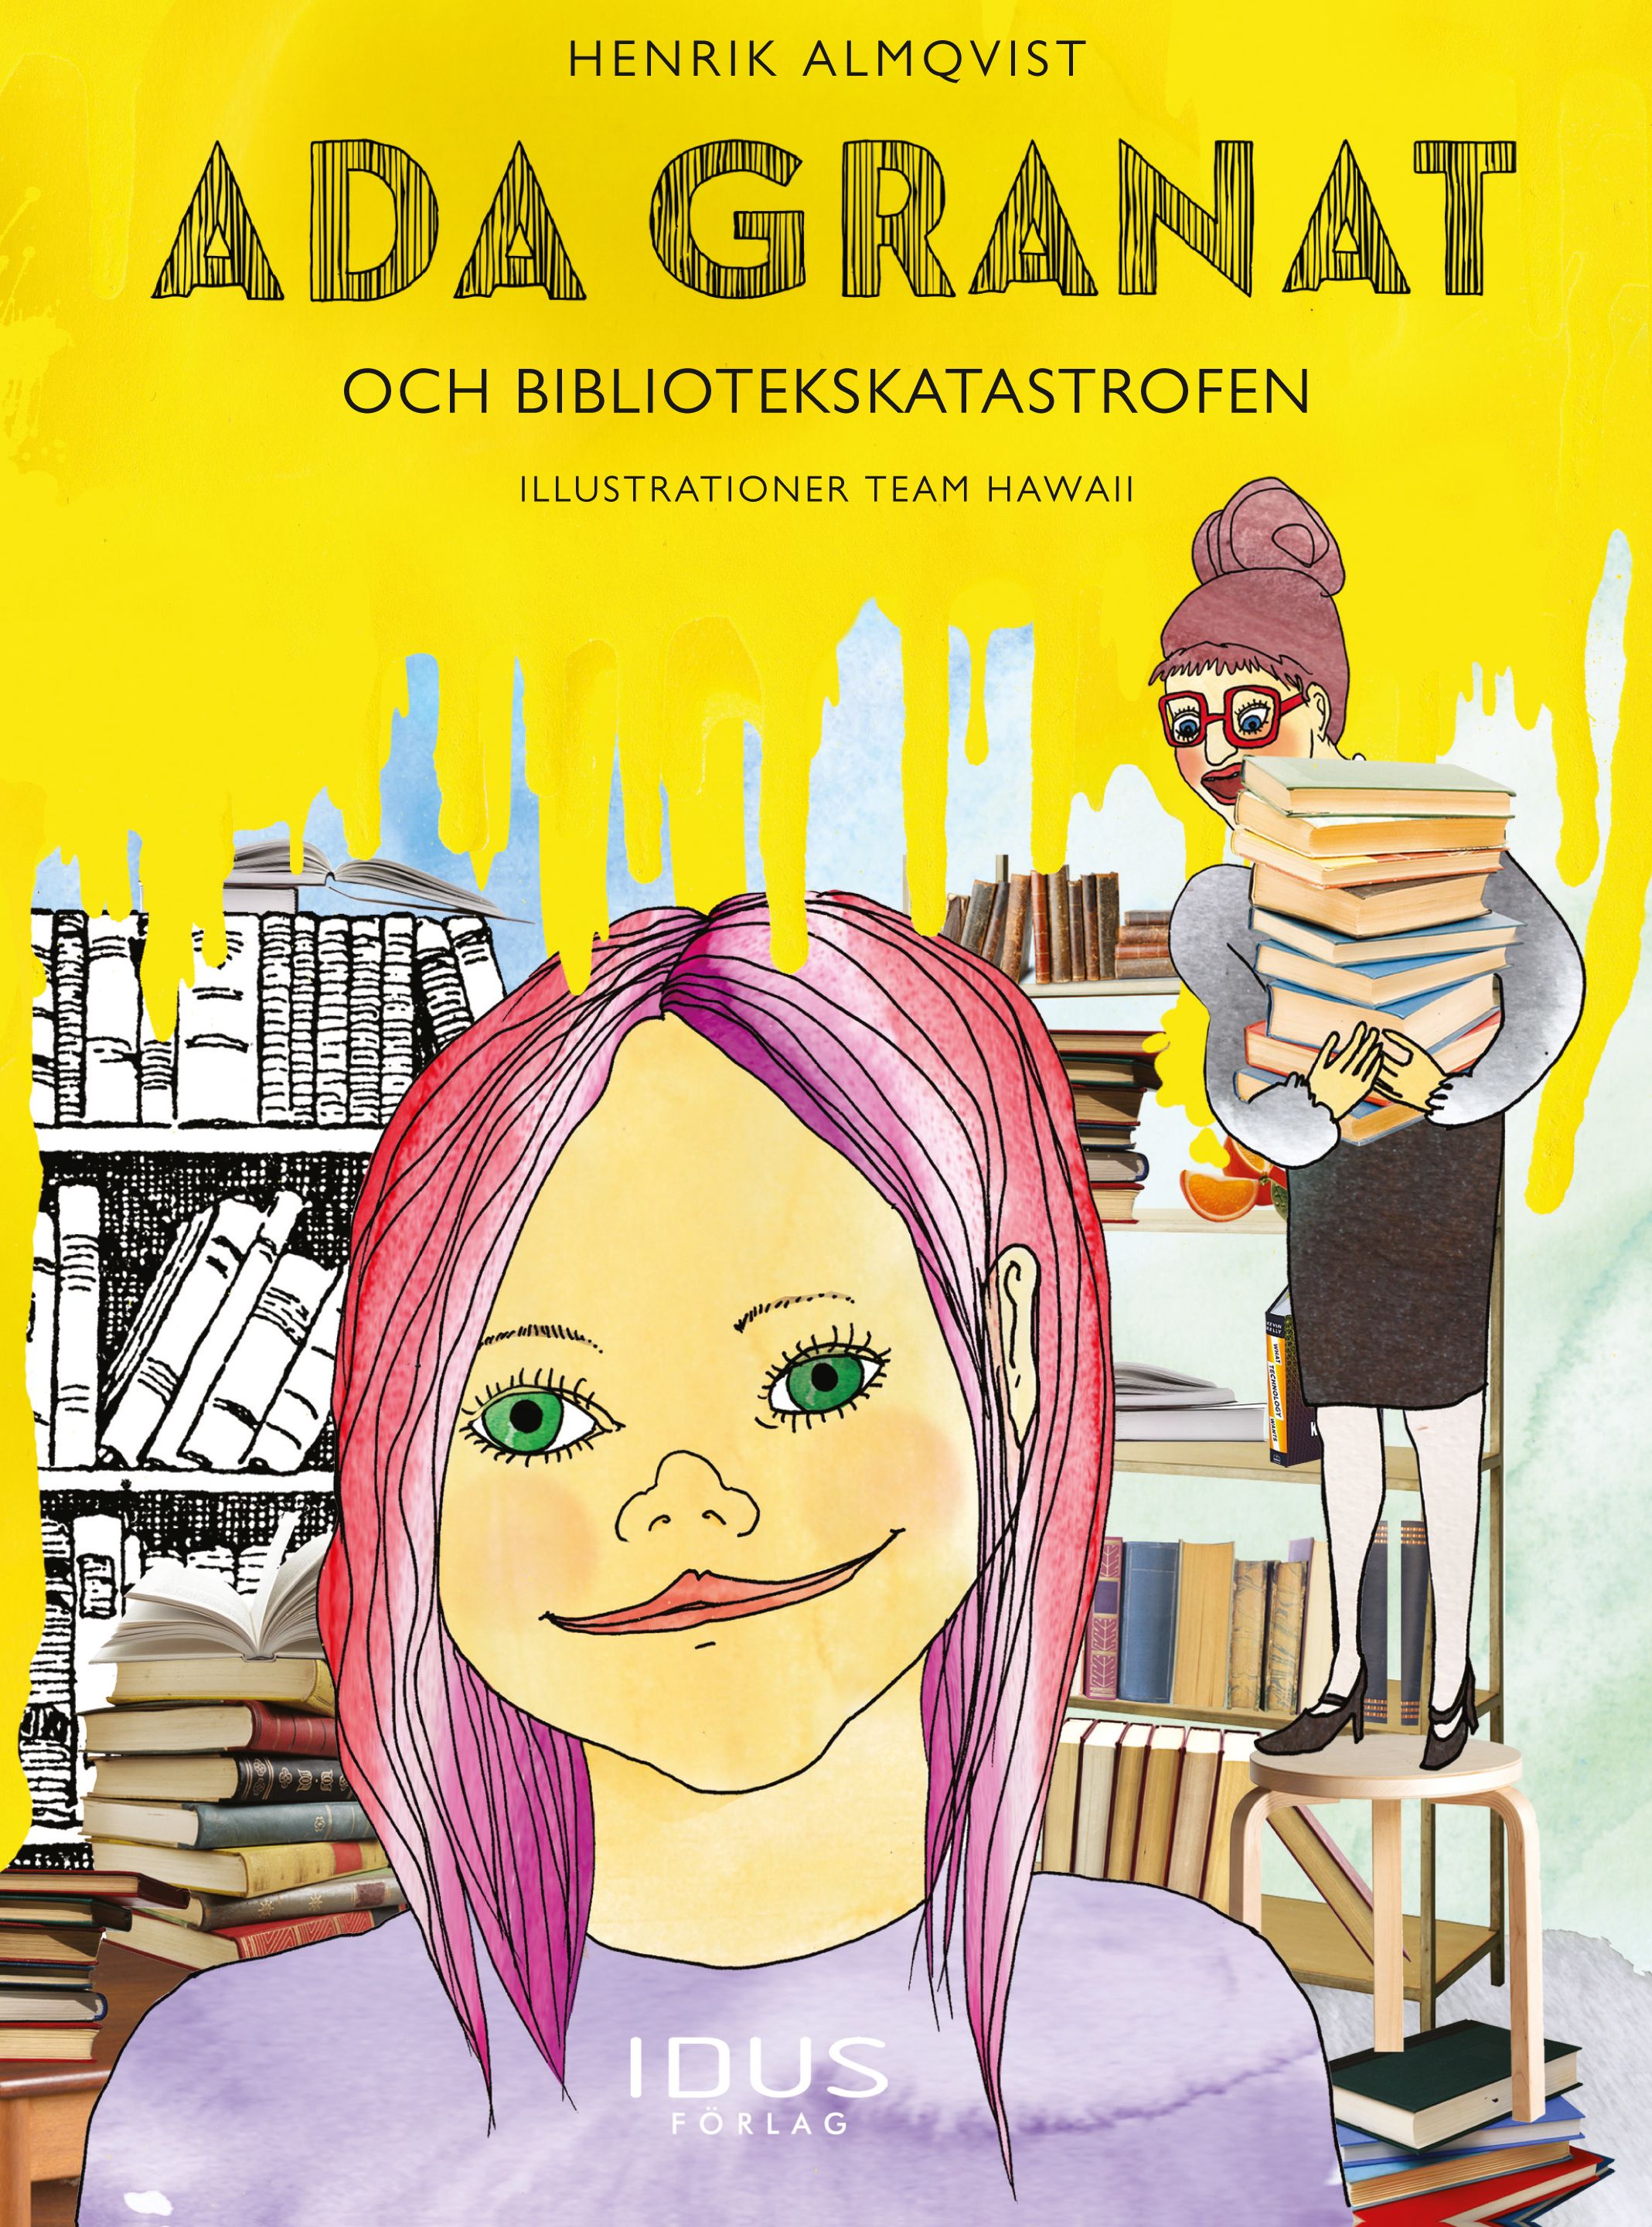 Bibliotekskatastrofen, e-bok av Henrik Almqvist